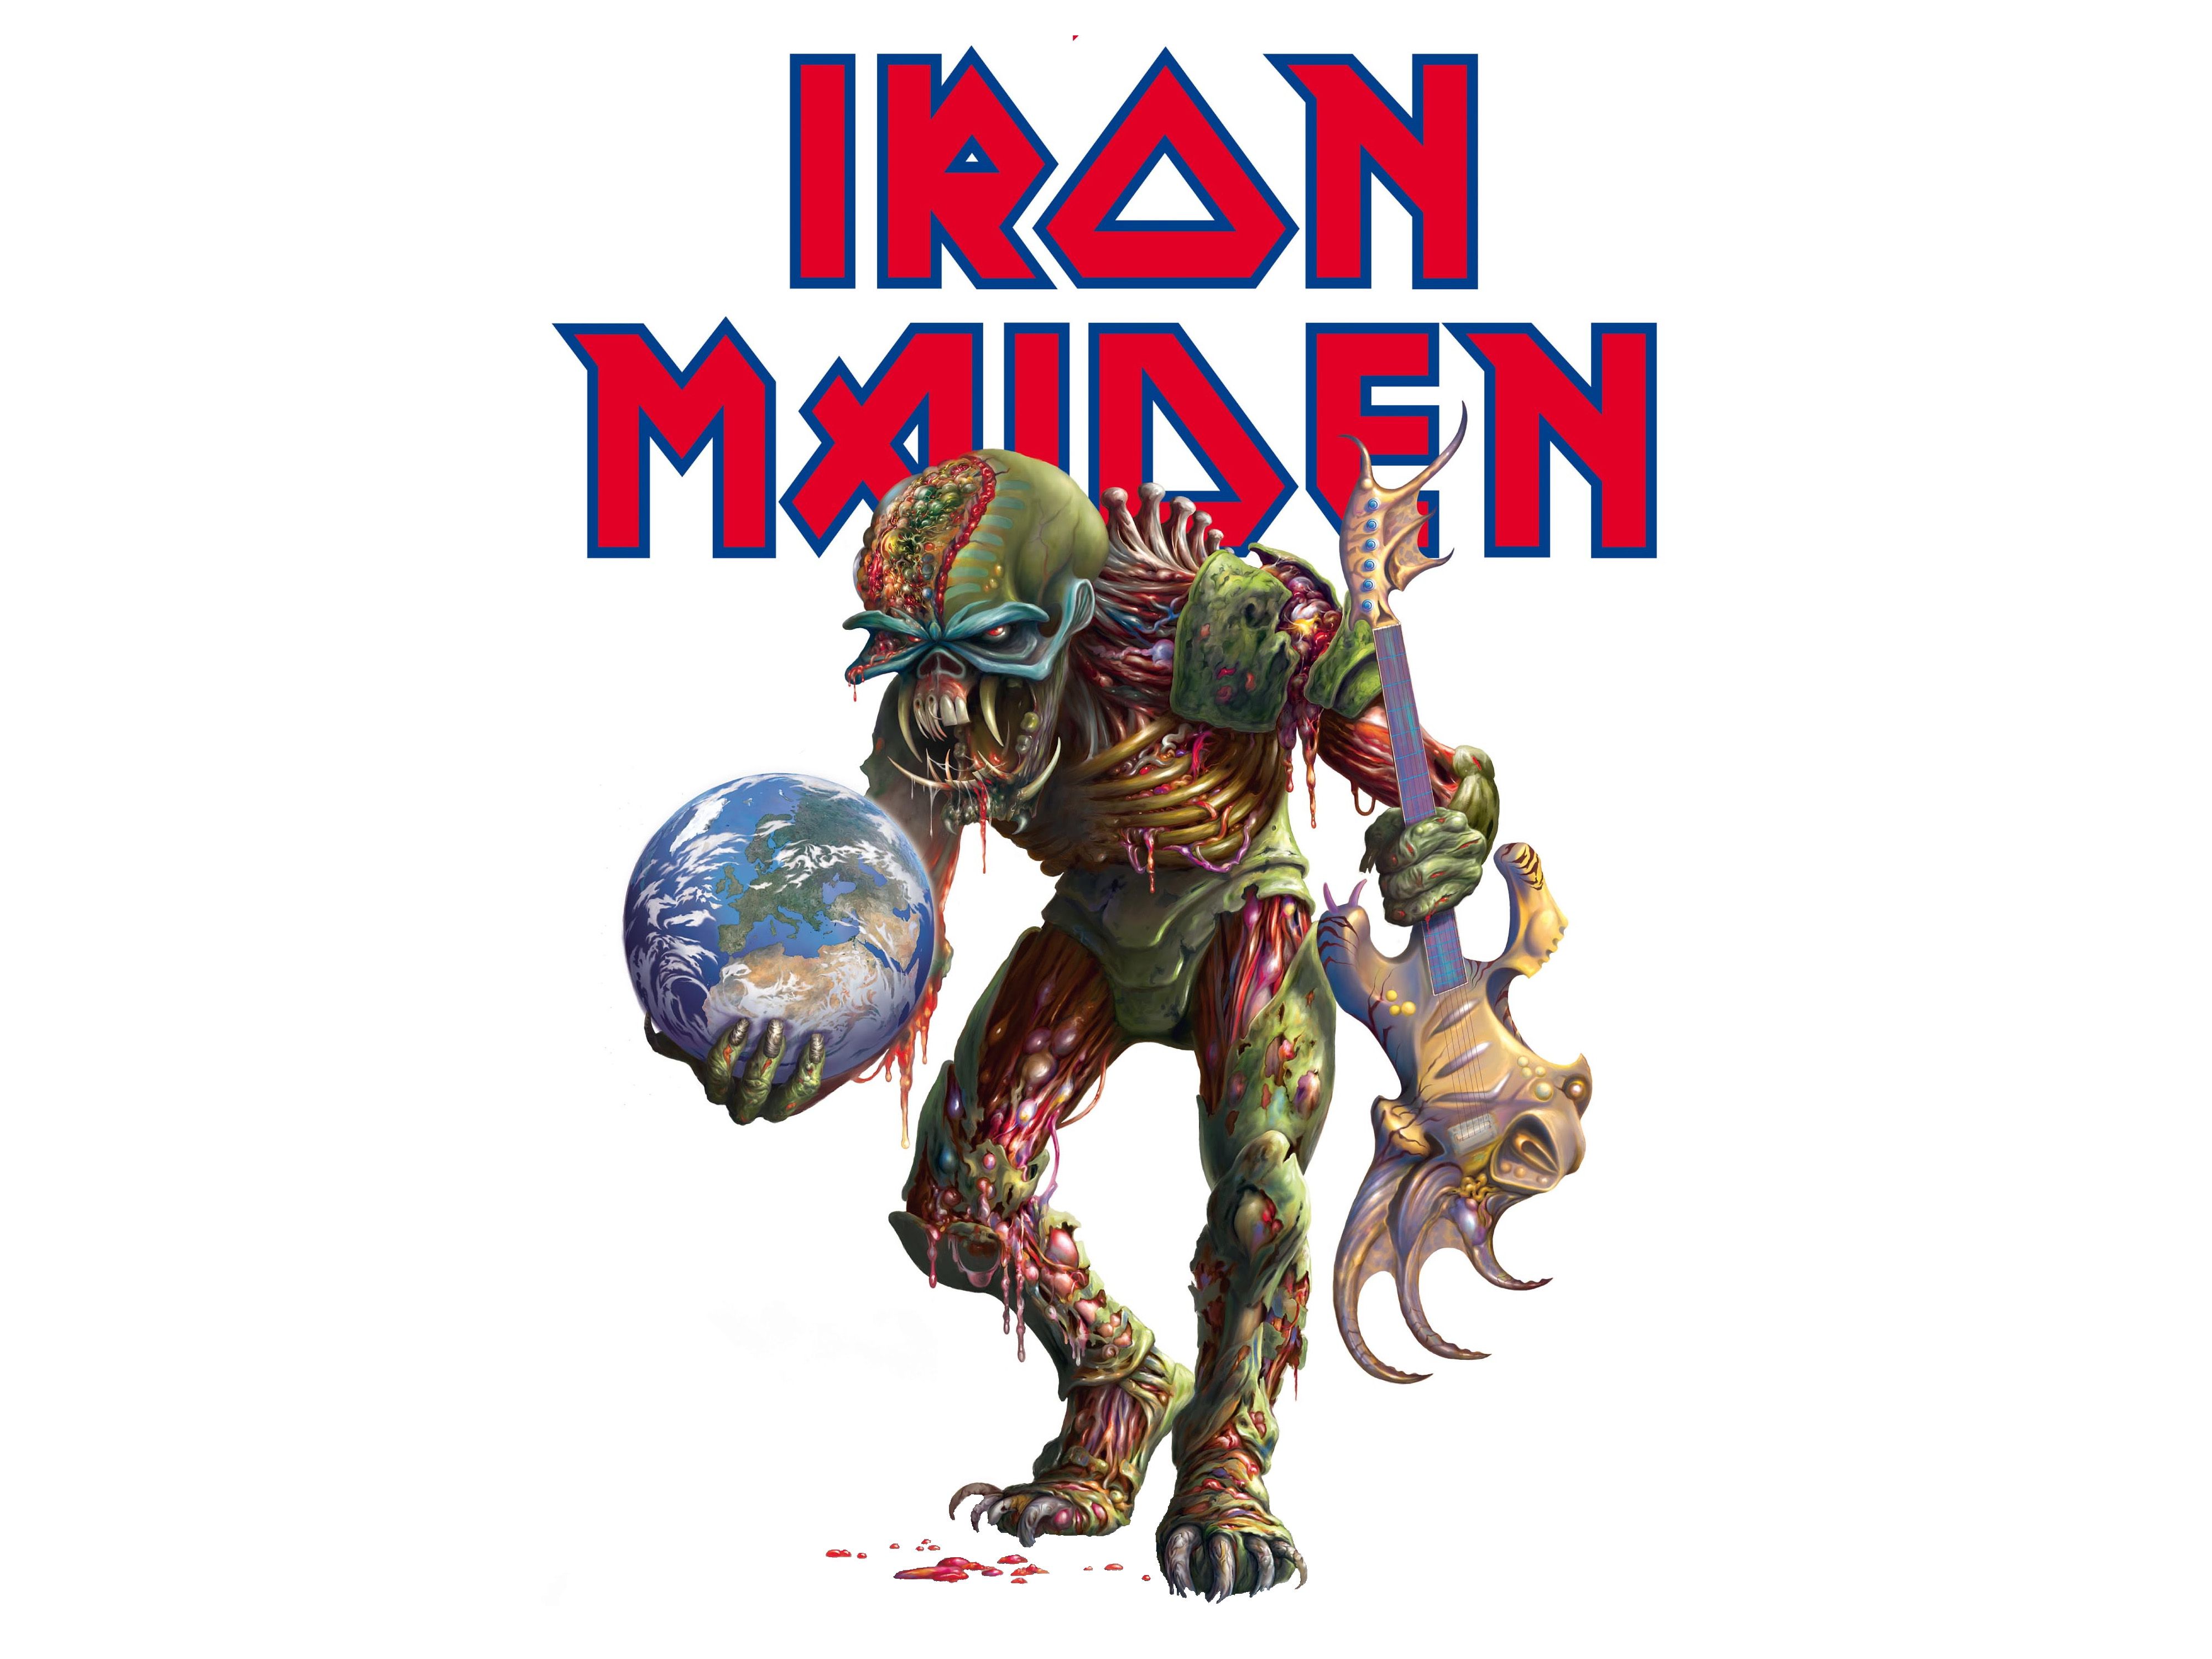 Iron Maiden Computer Wallpapers, Desktop Backgrounds 4000x3000